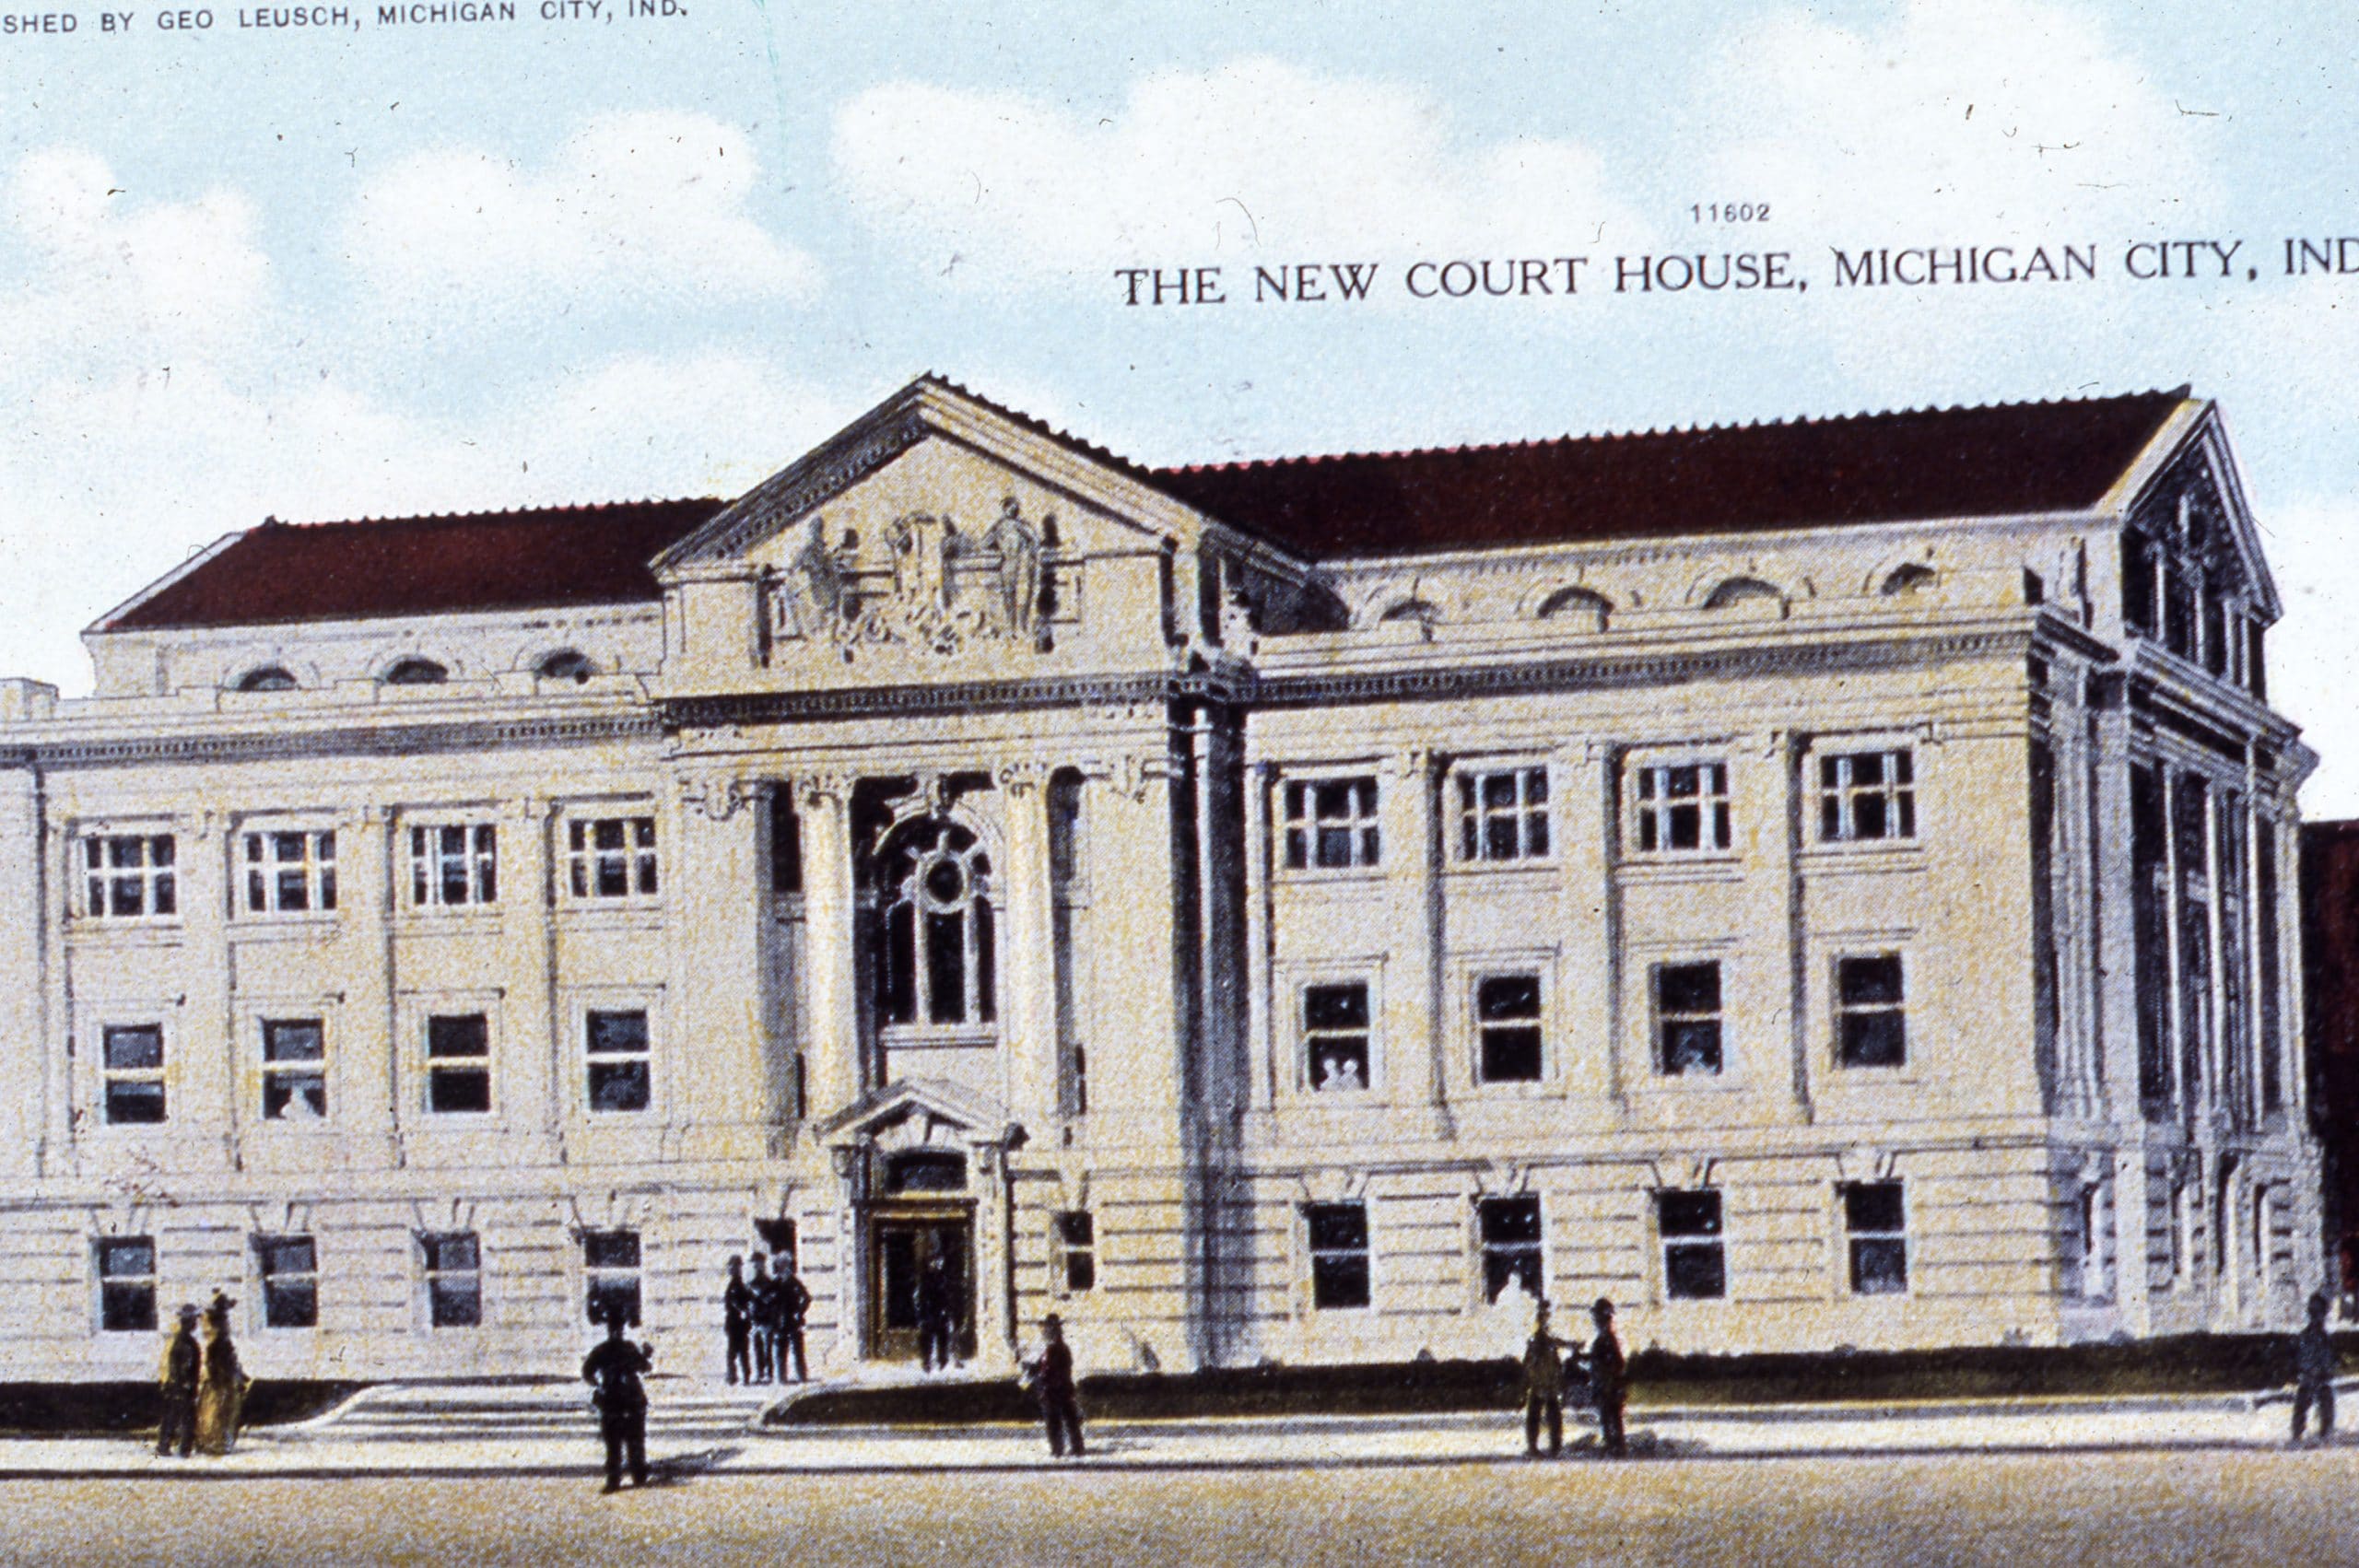 Michigan City courthouse postcard